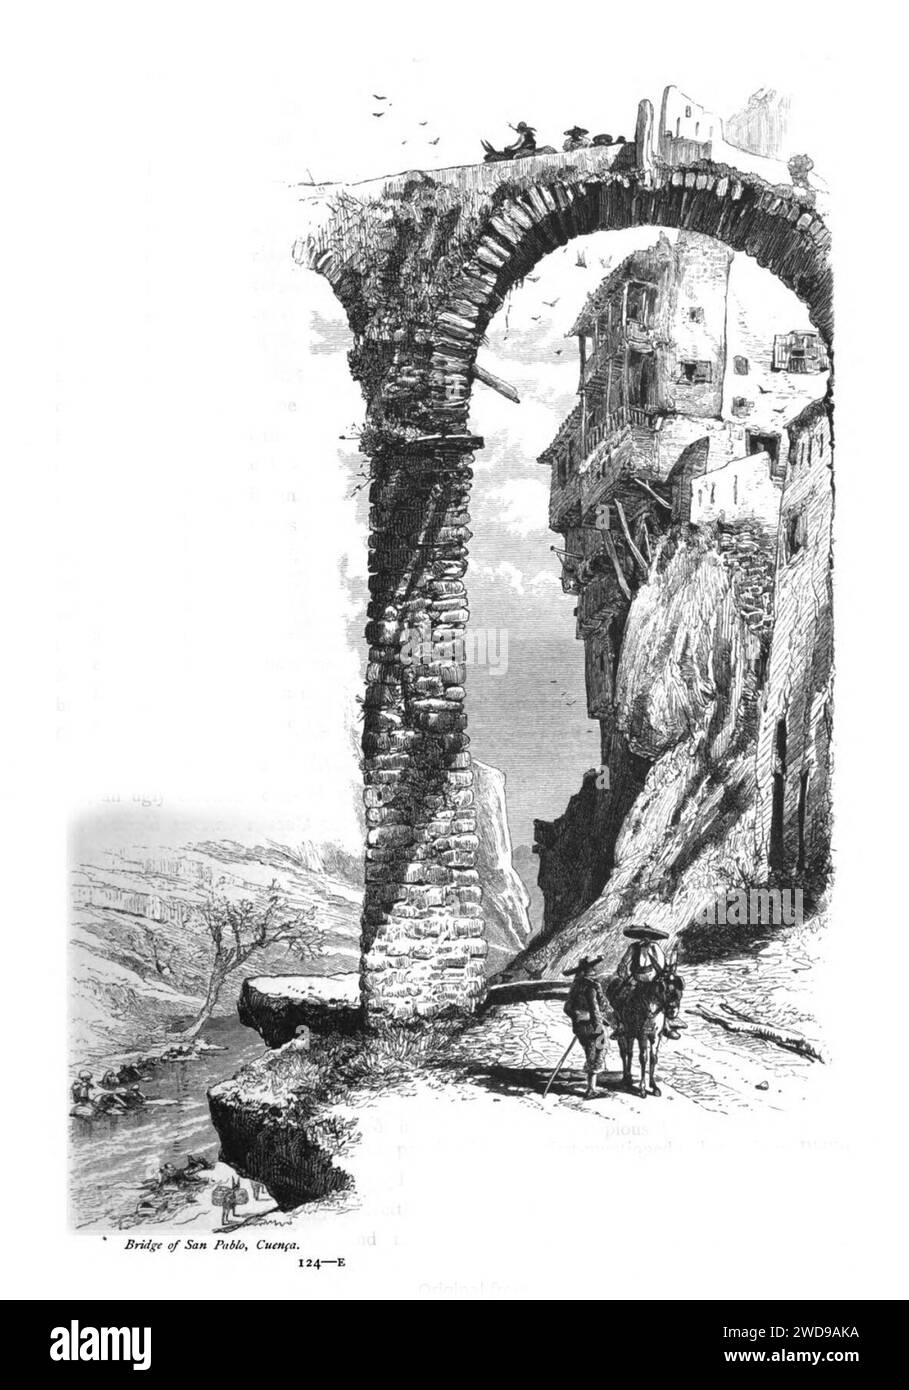 1879, Picturesque Europe, vol III, Bridge of San Pablo, Cuenca. Stock Photo